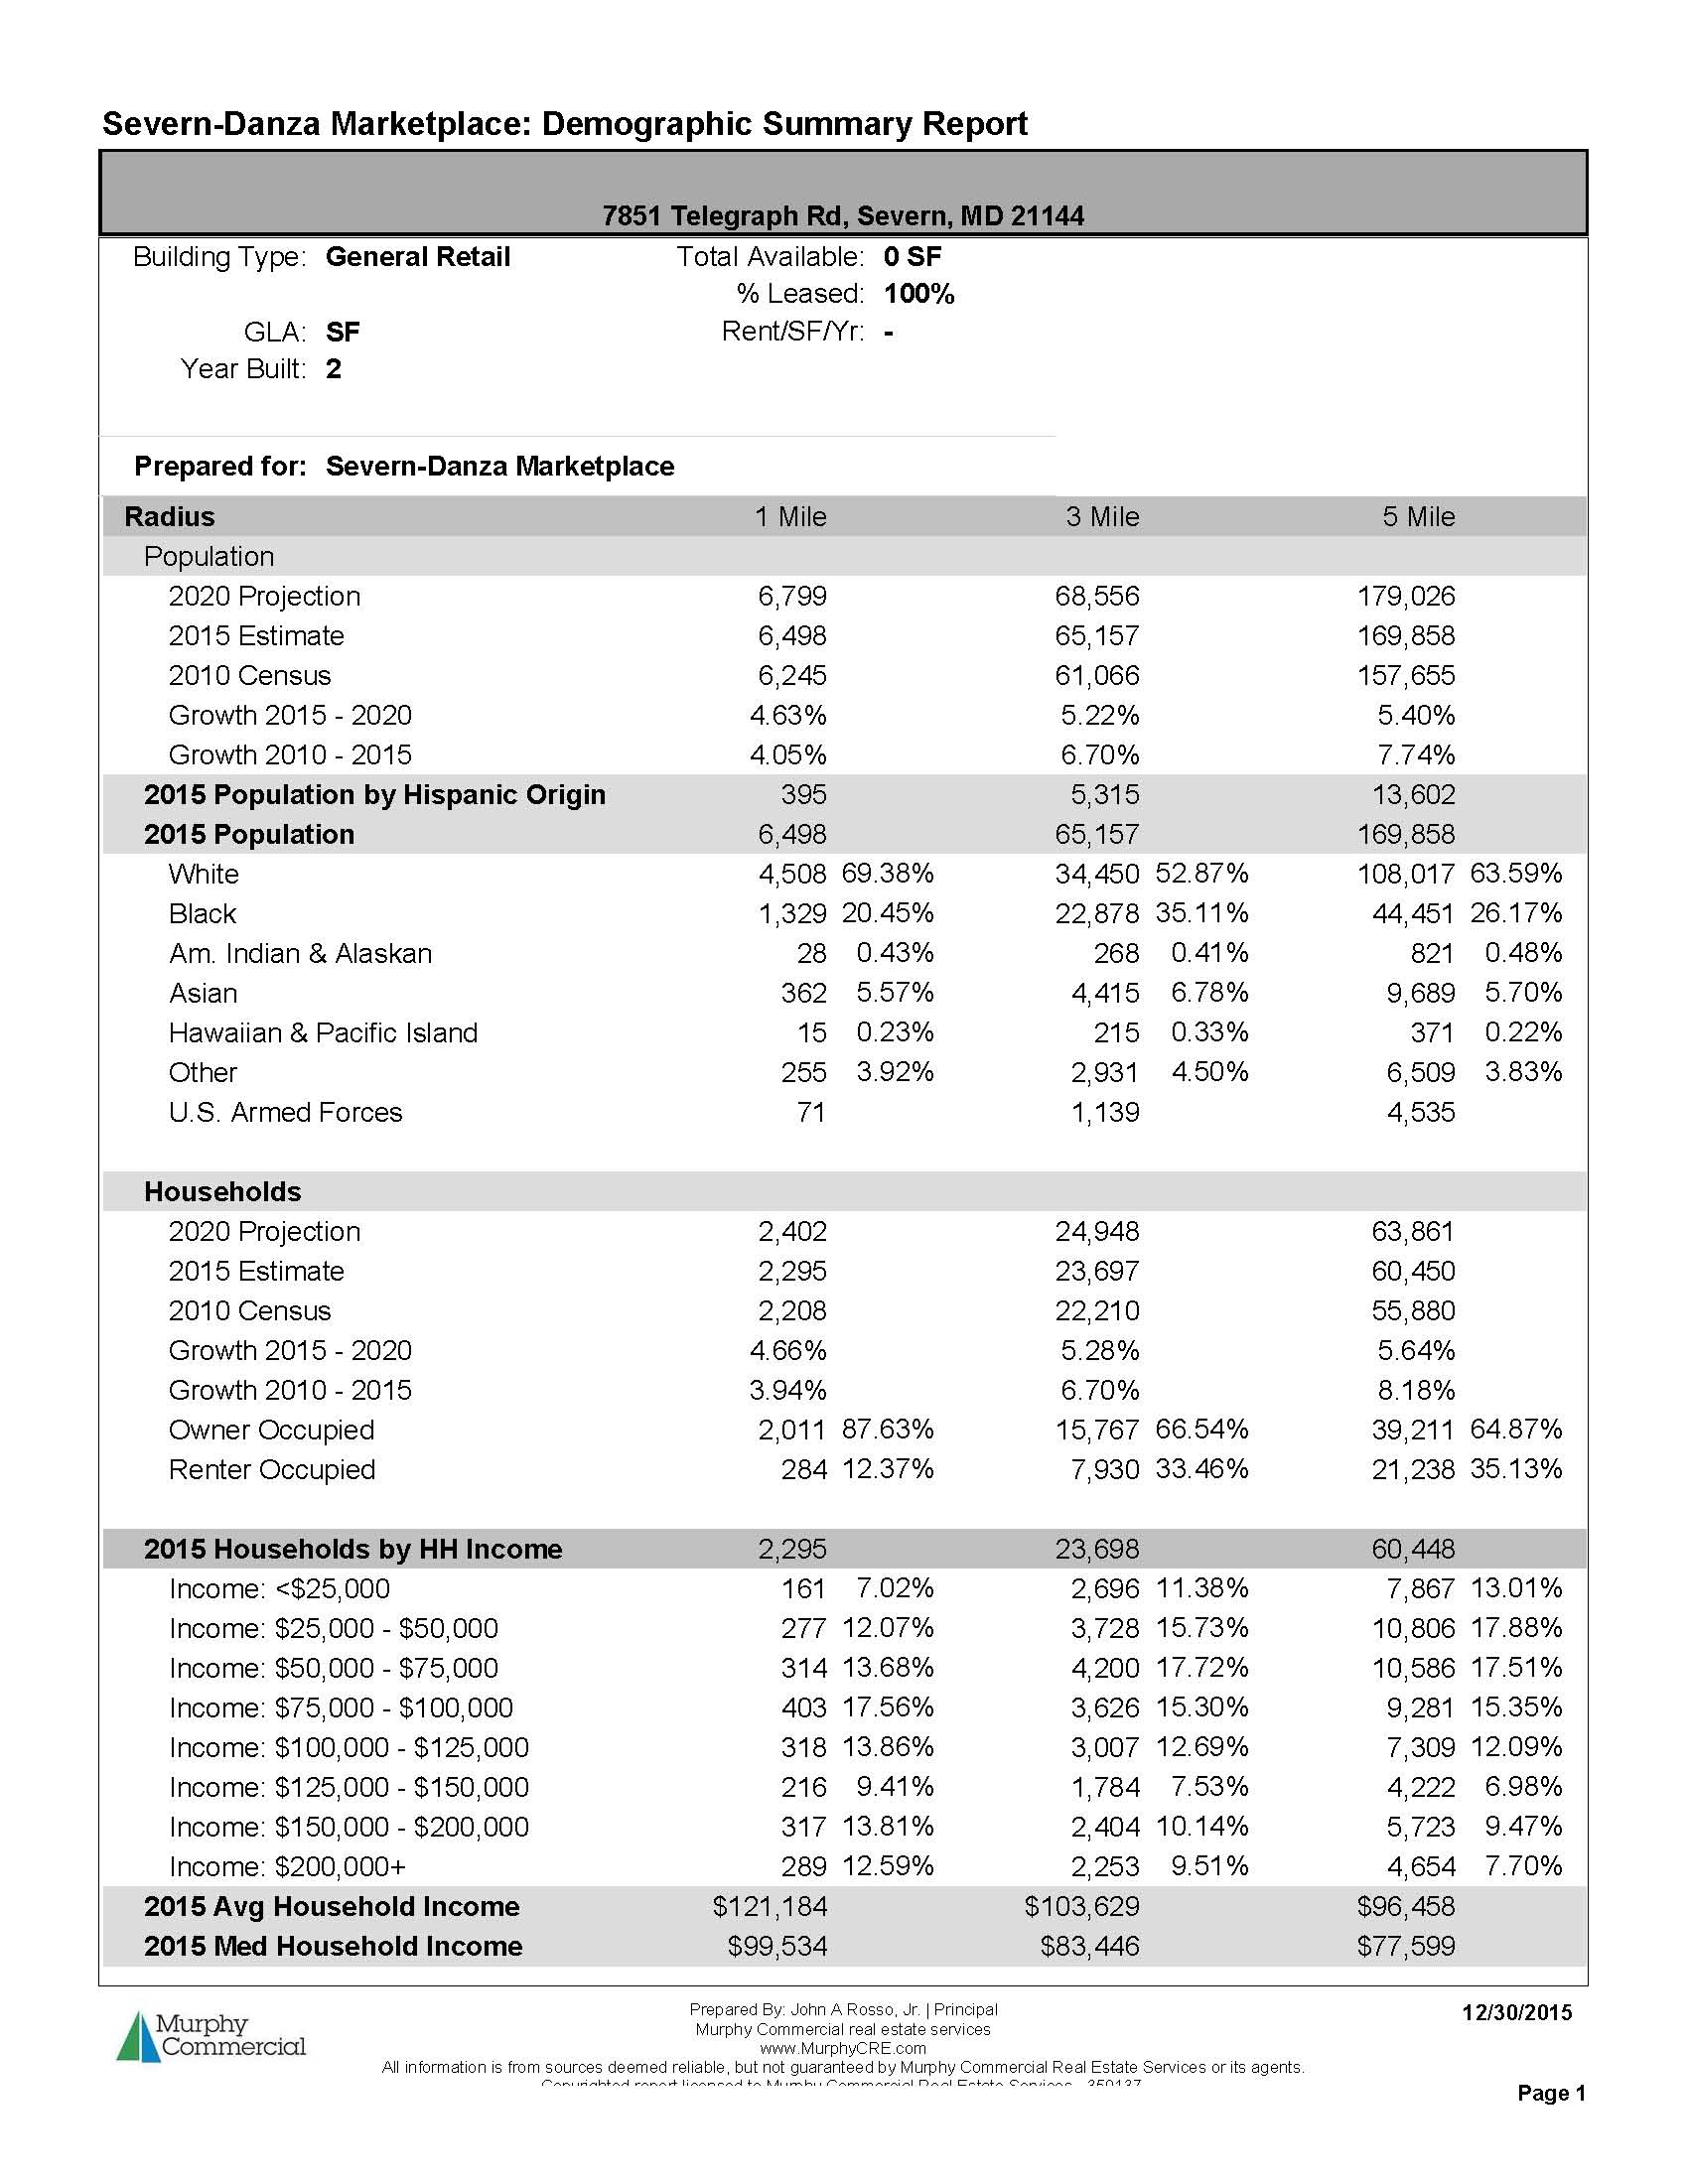 Severn-Danza Demographics Report